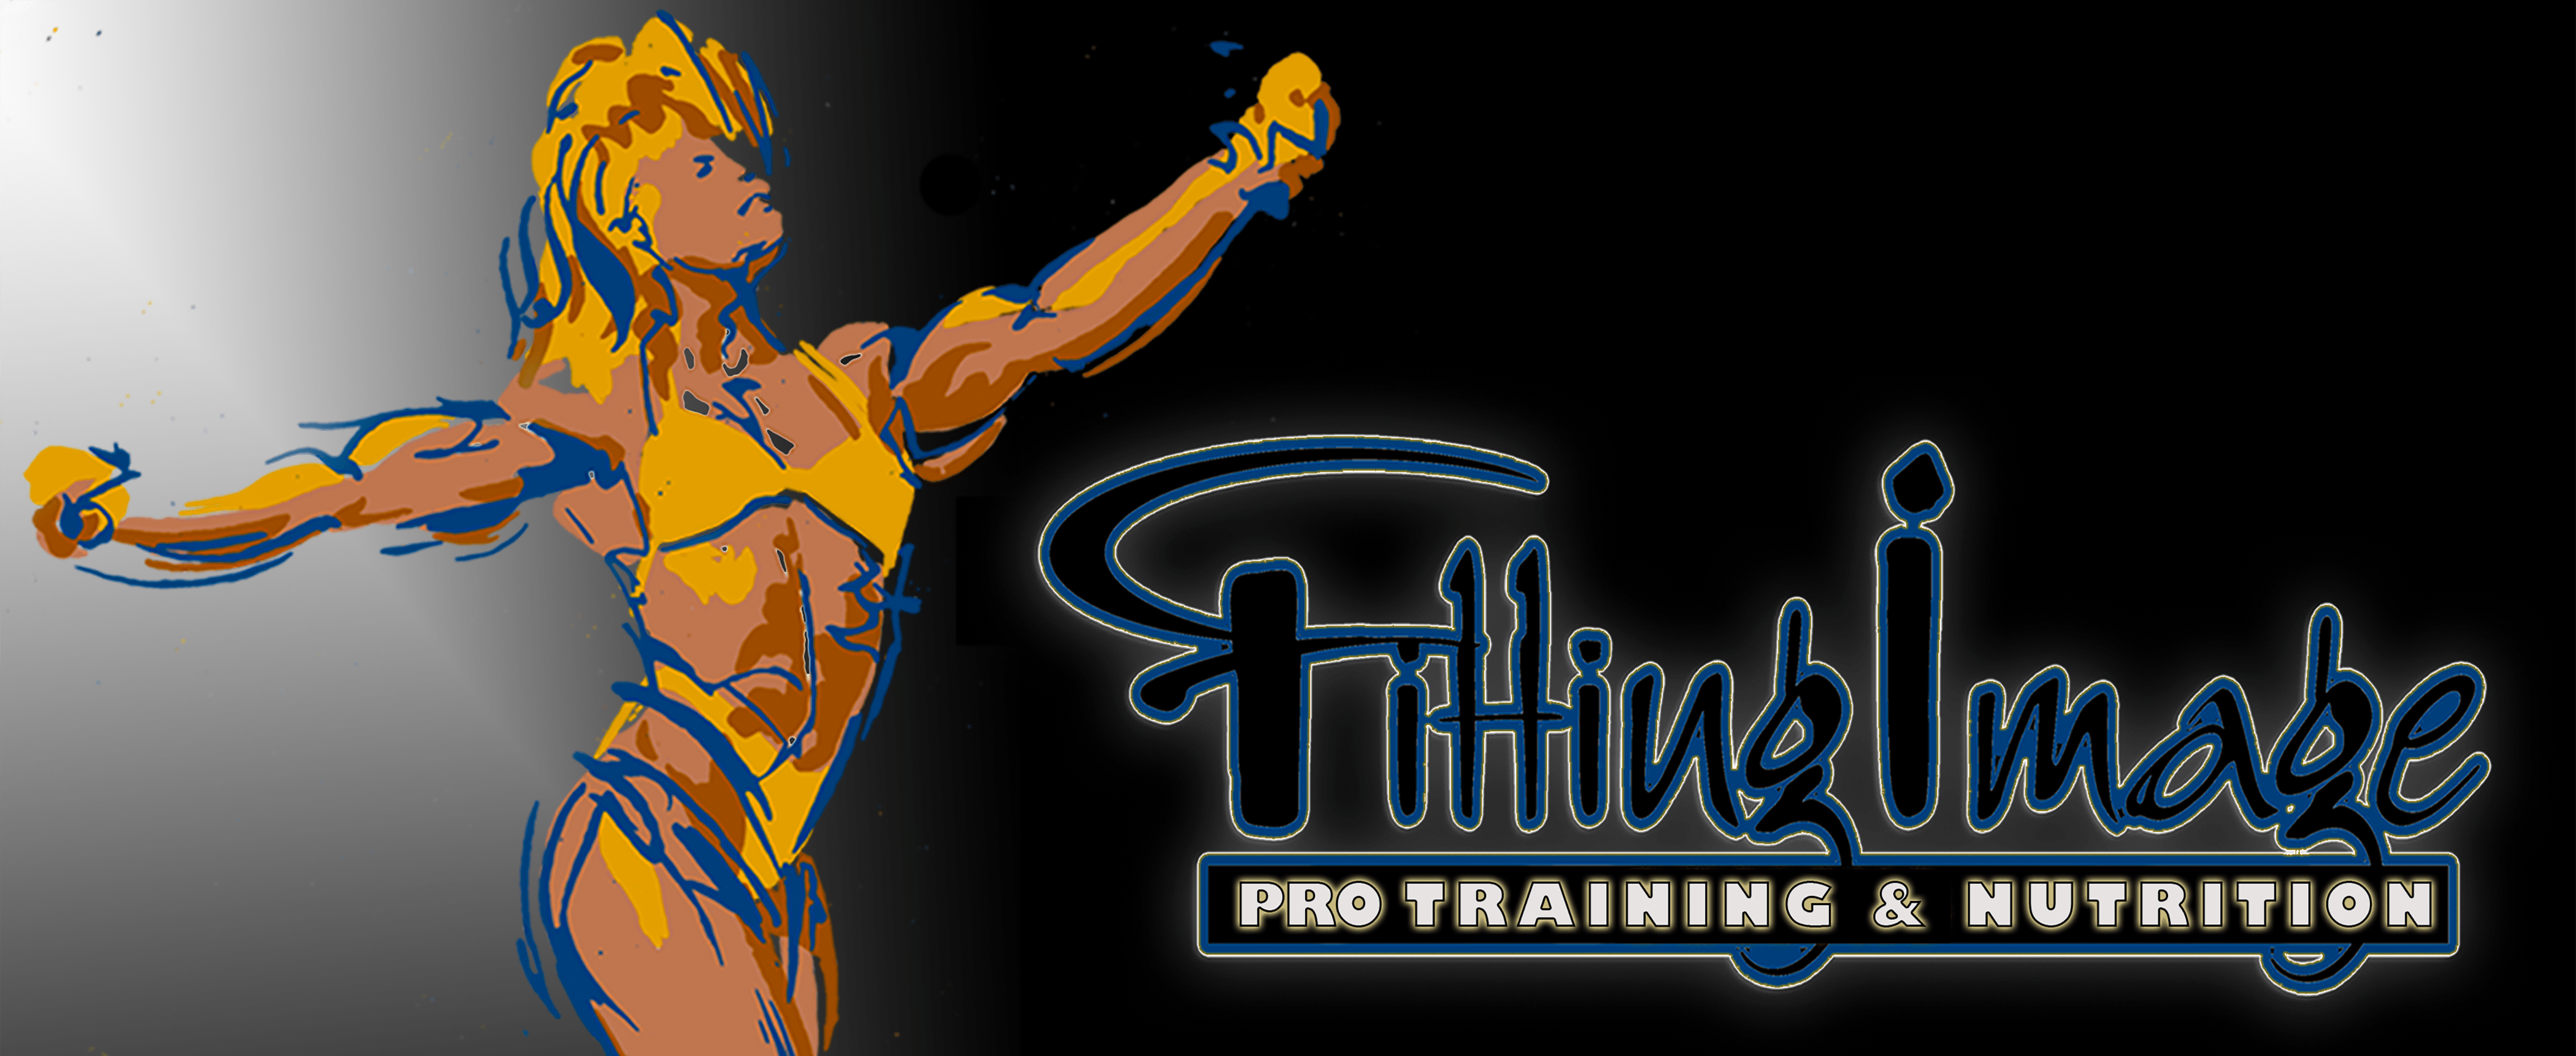 Fitting Image Pro Training & Nutrition Logo on a black background.